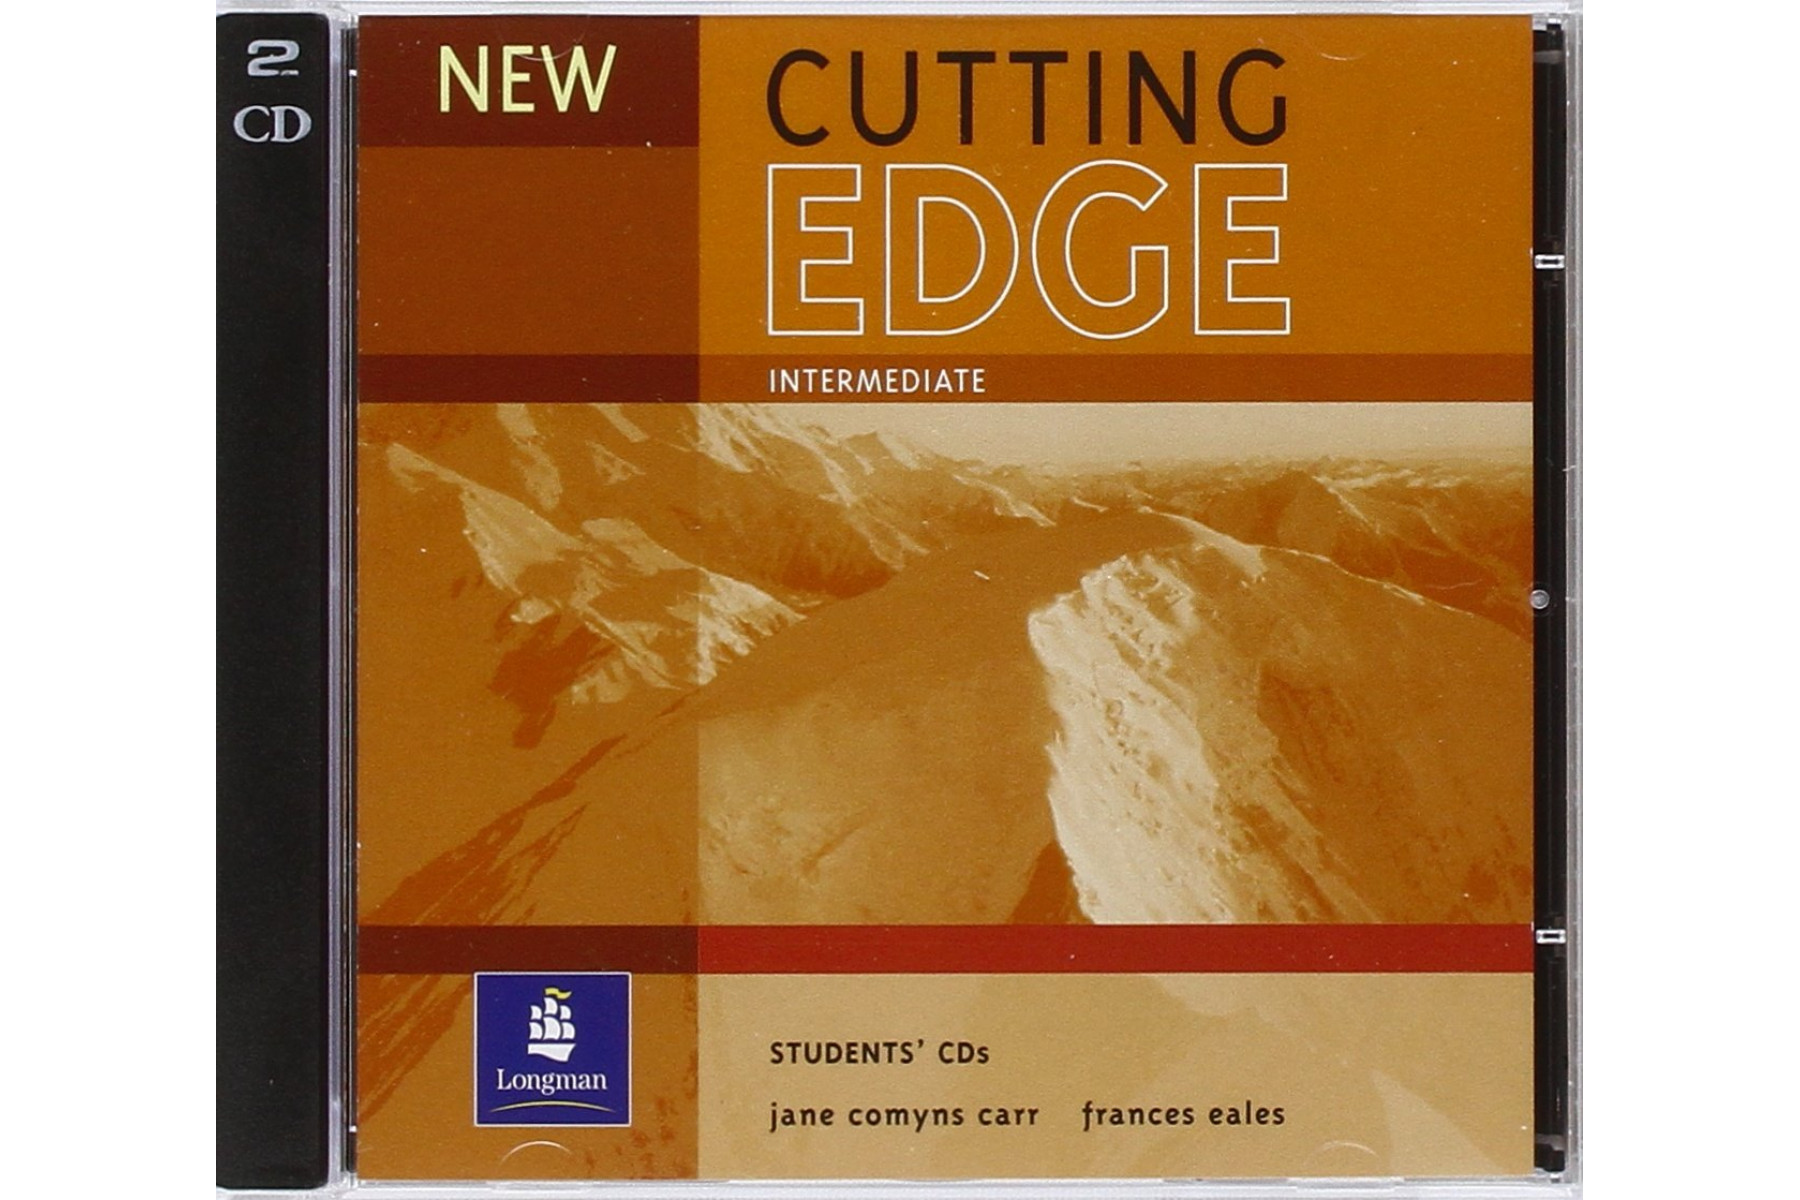 New Cutting Edge Intermediate Student CDs (2)